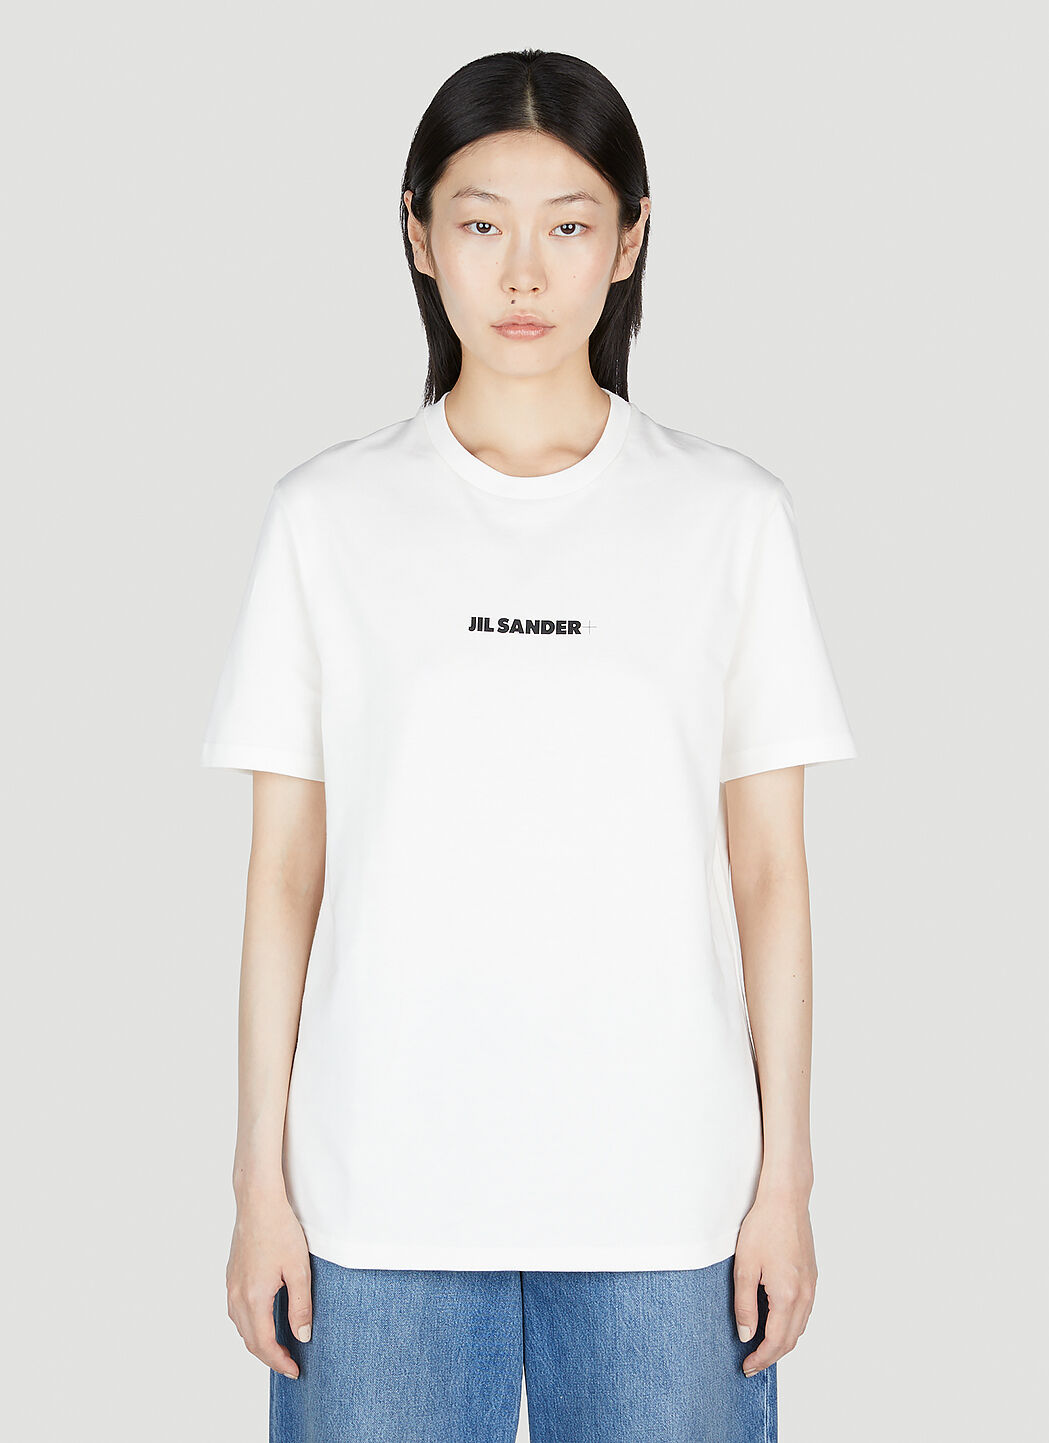 Jil Sander+ 로고 티셔츠 멀티컬러 jsp0255007